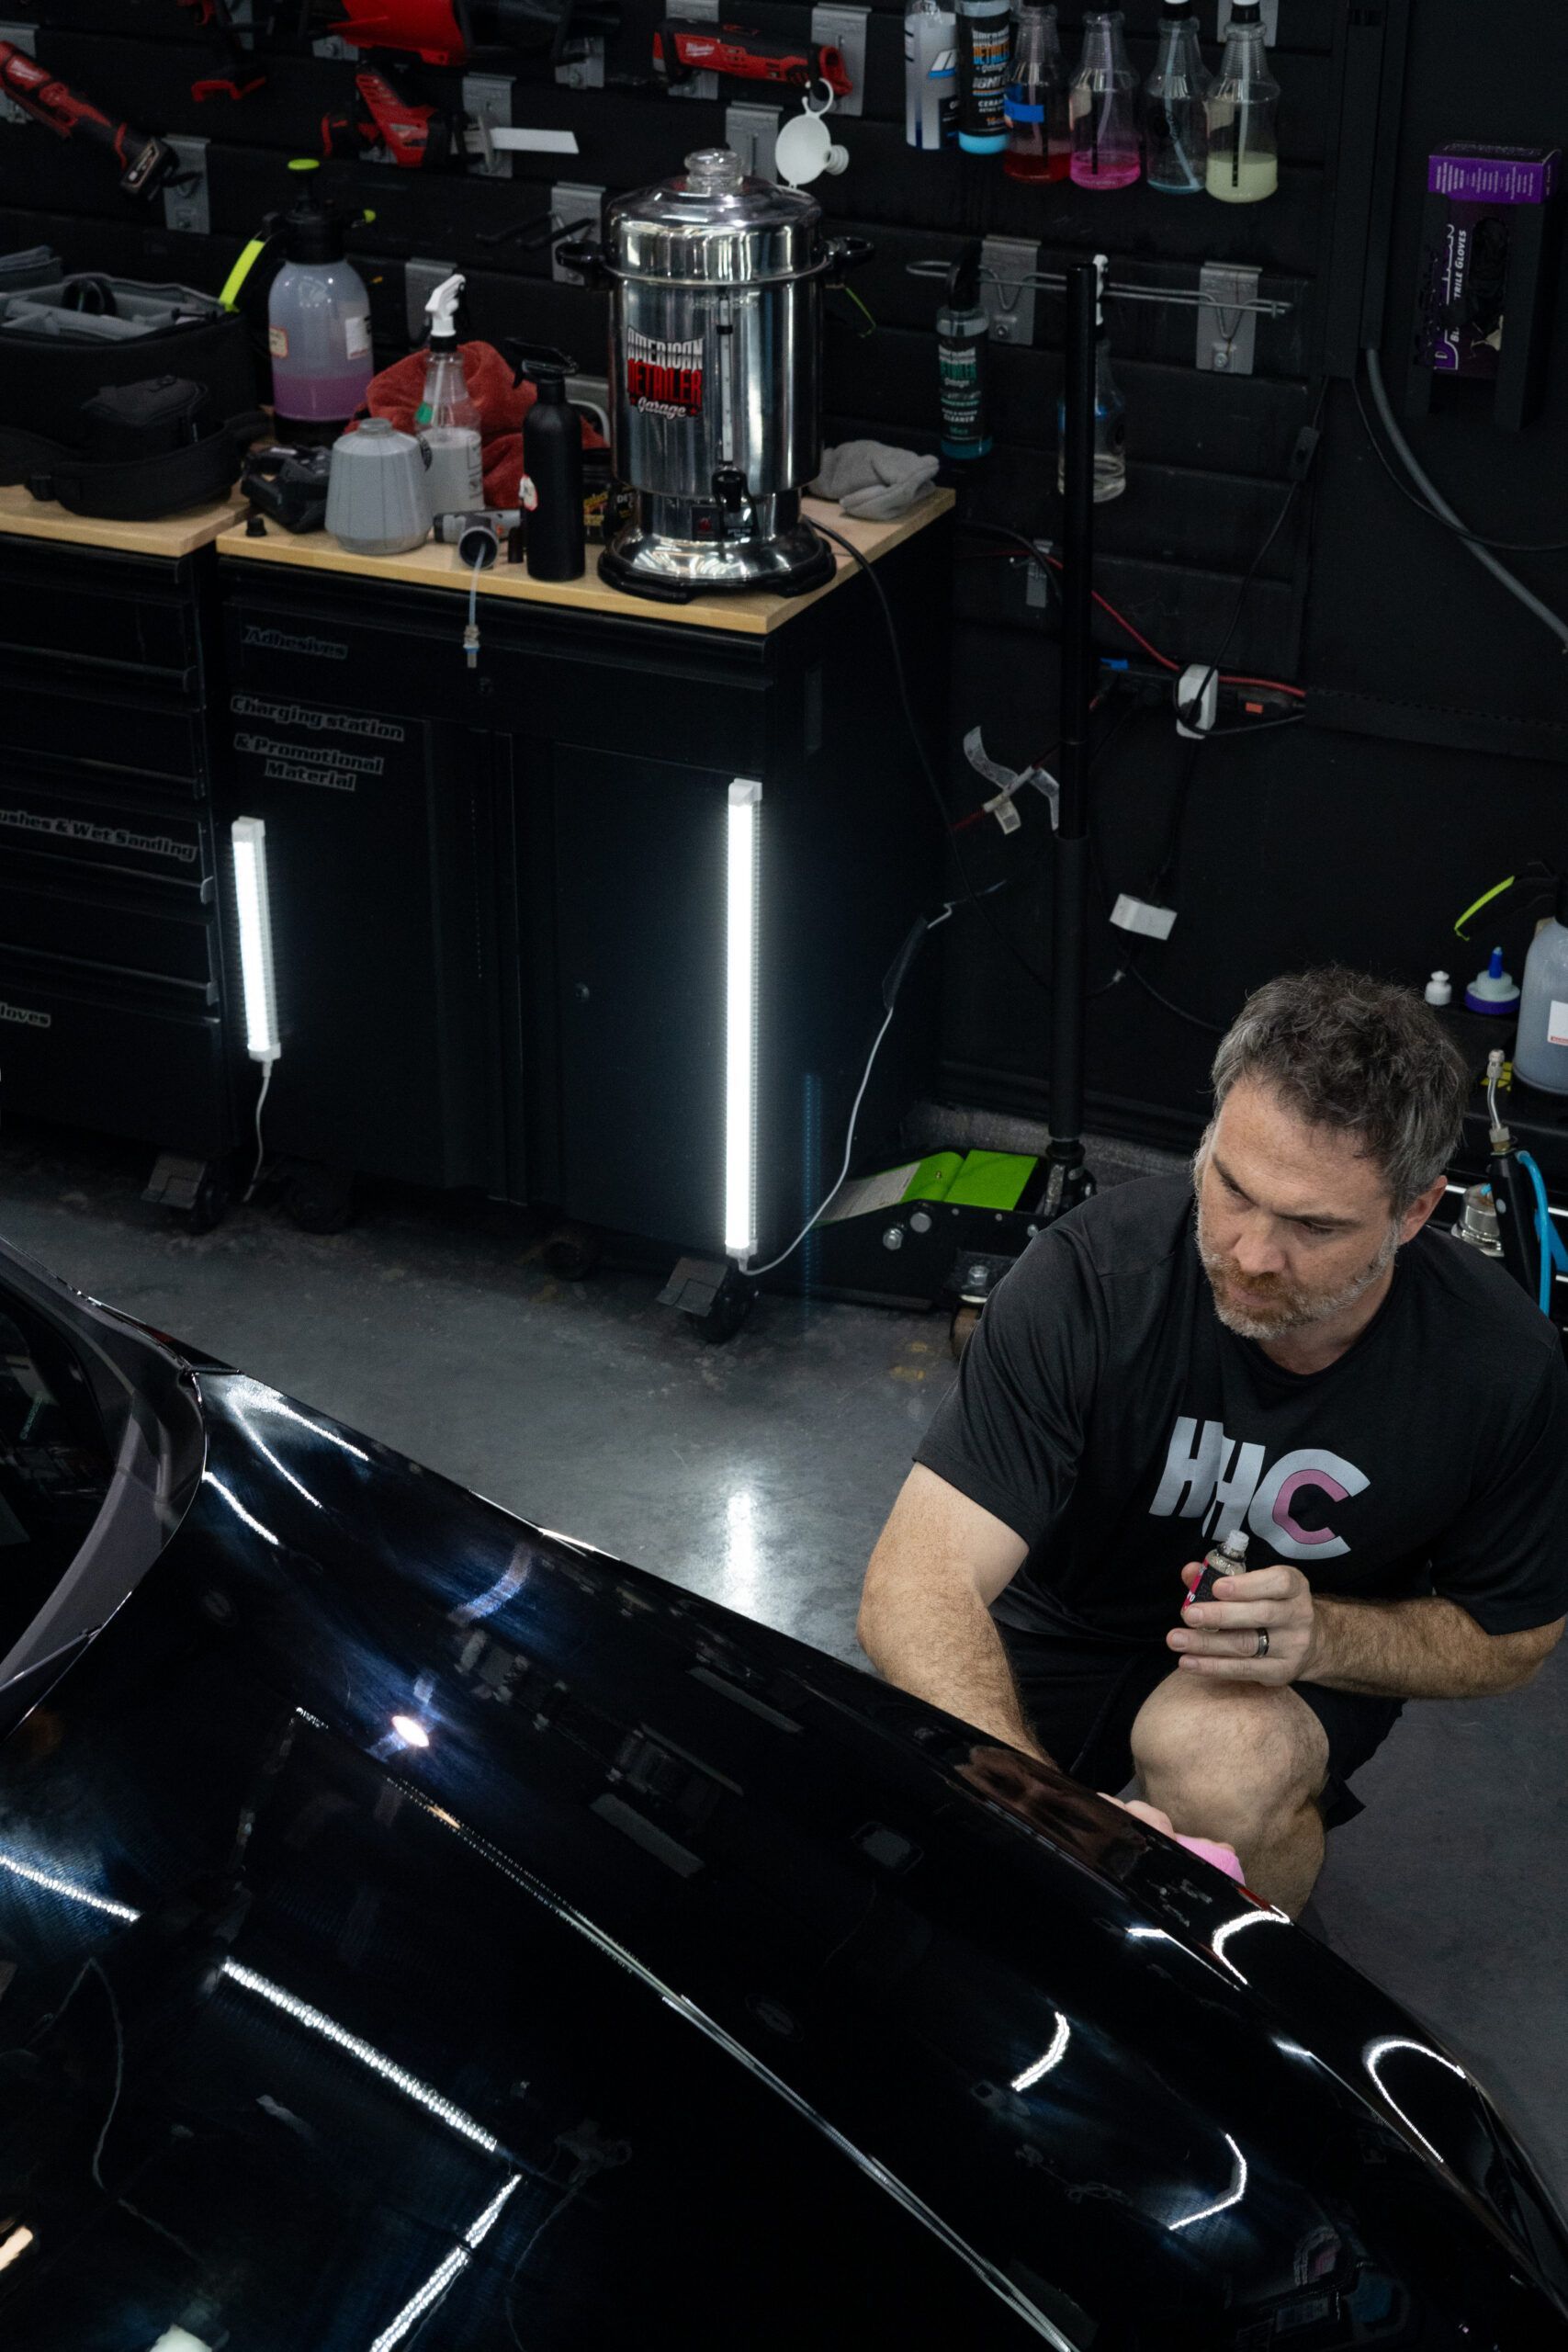 A man is sitting next to a black car in a garage.